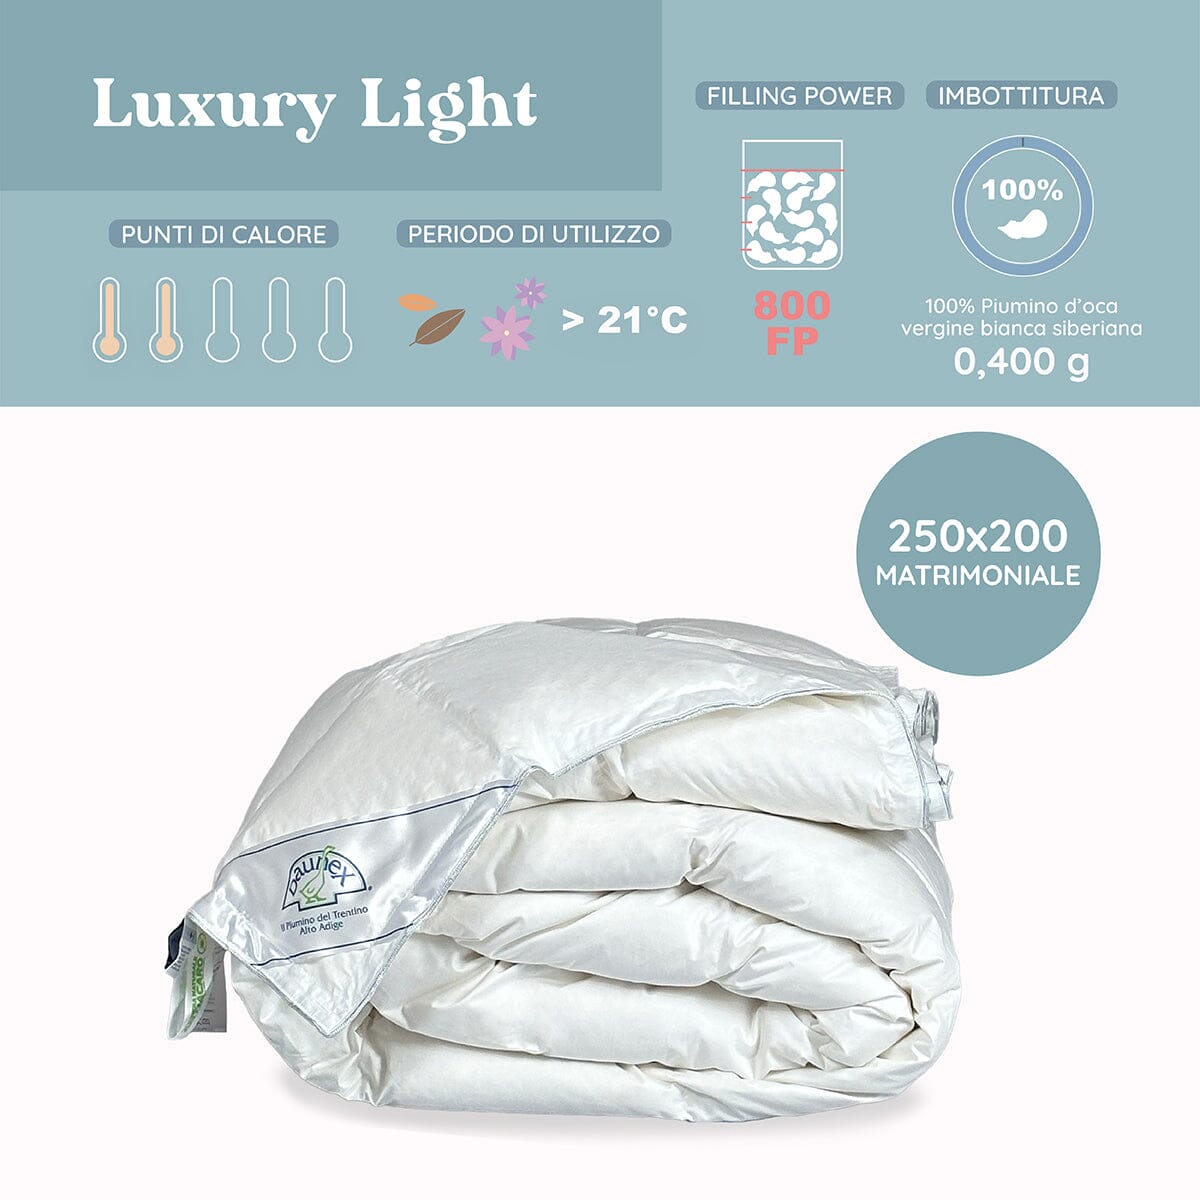 Daunex Siberian Luxury Piumino Light Piumino d'oca Daunex 250 x 200 (Matrimoniale) 